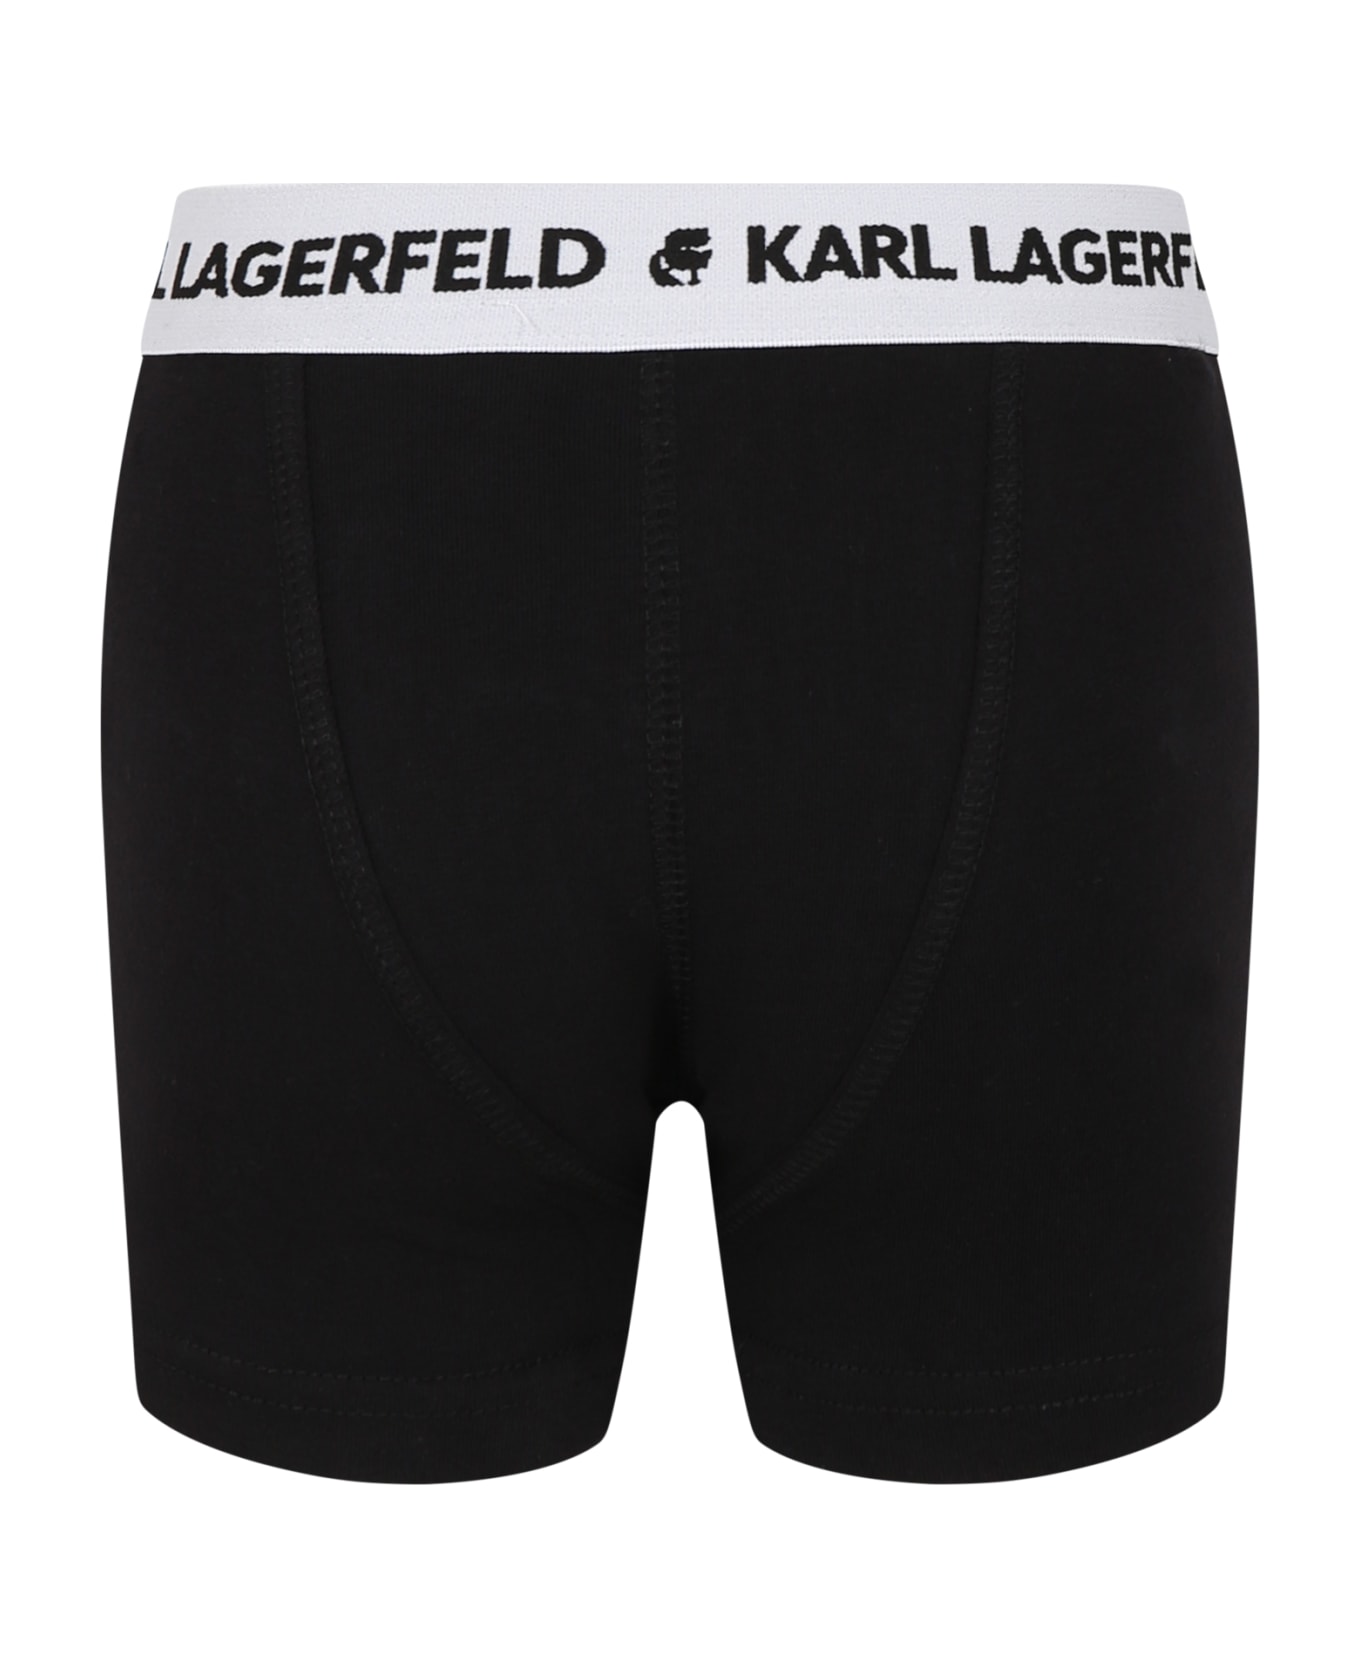 Karl Lagerfeld Kids Black Set For Boy With Logo - Black